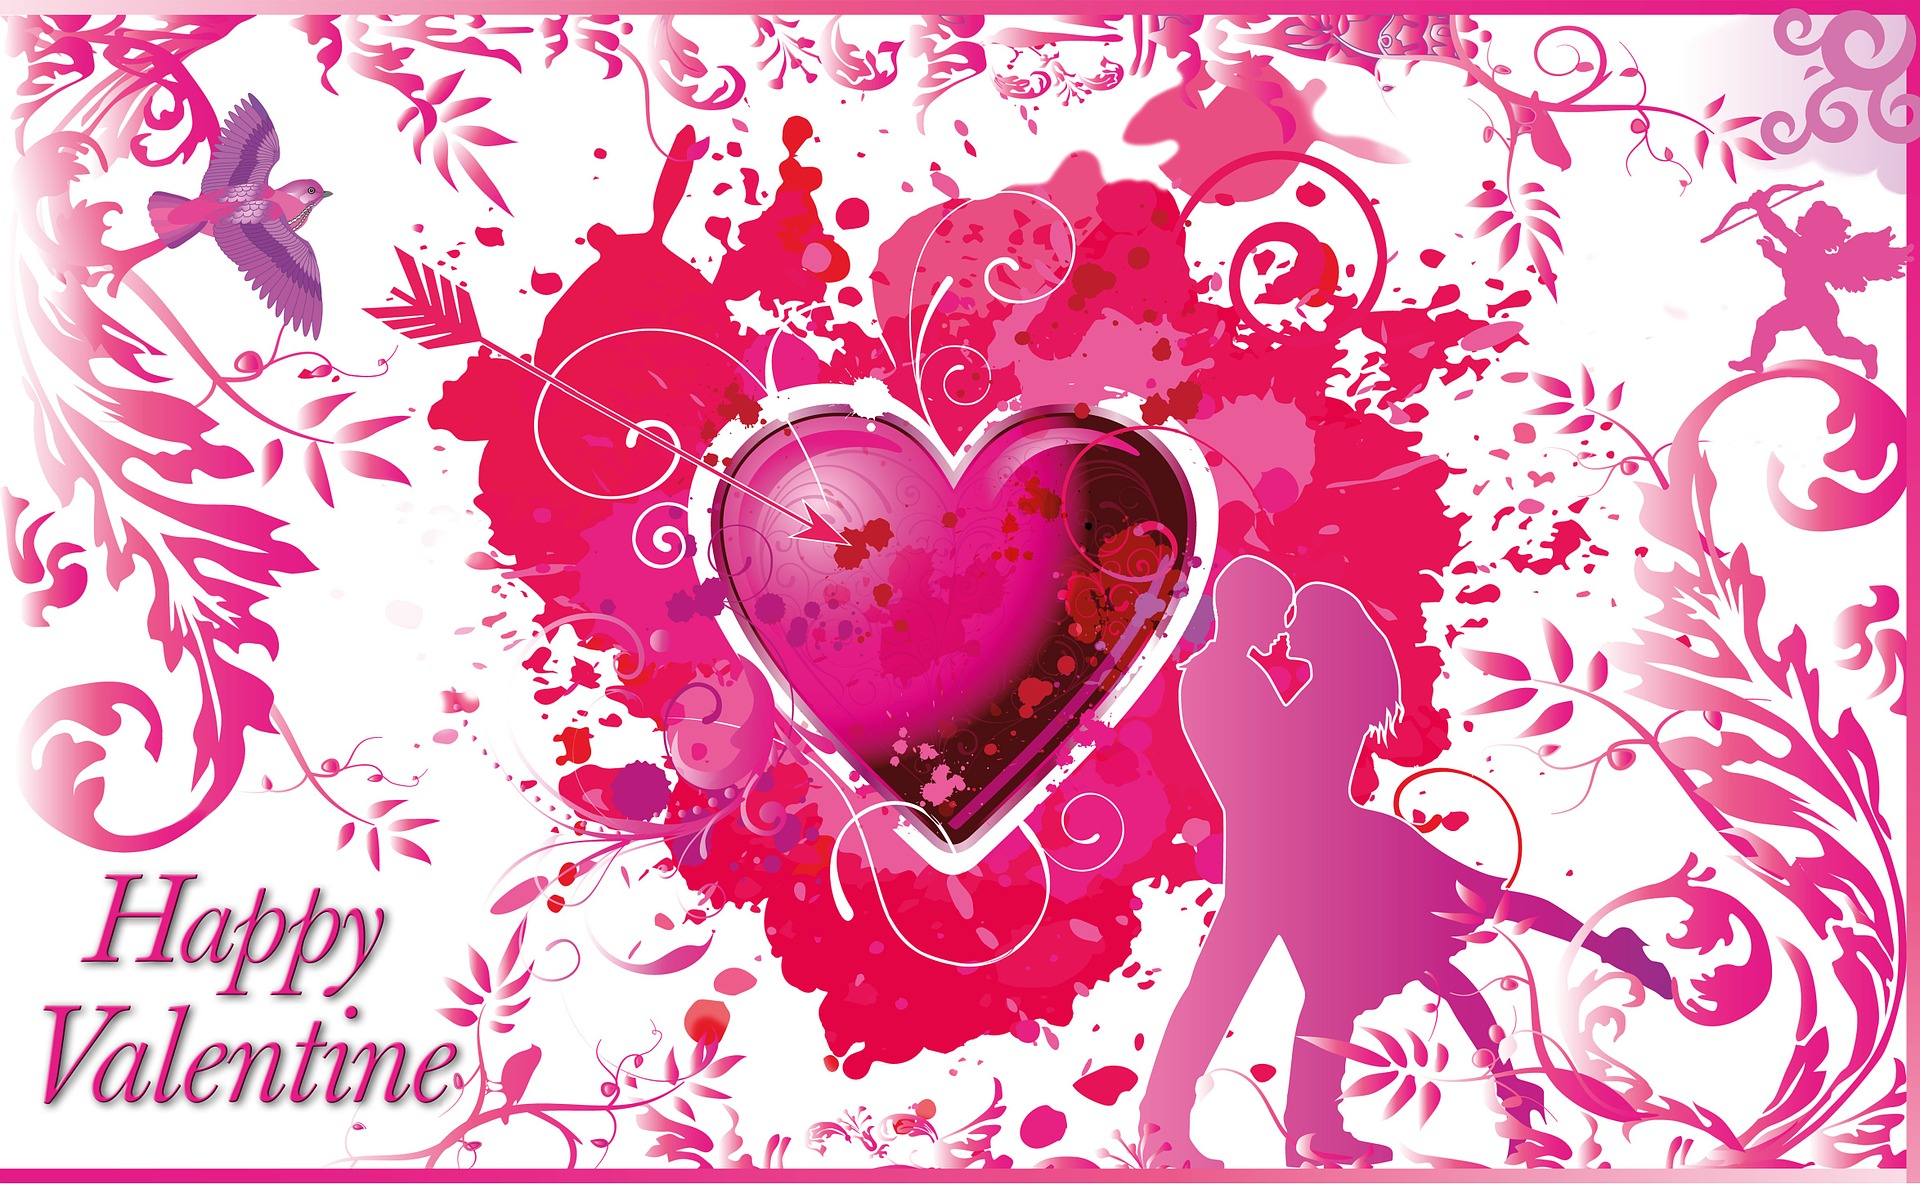 Very happy valentine illustration photo